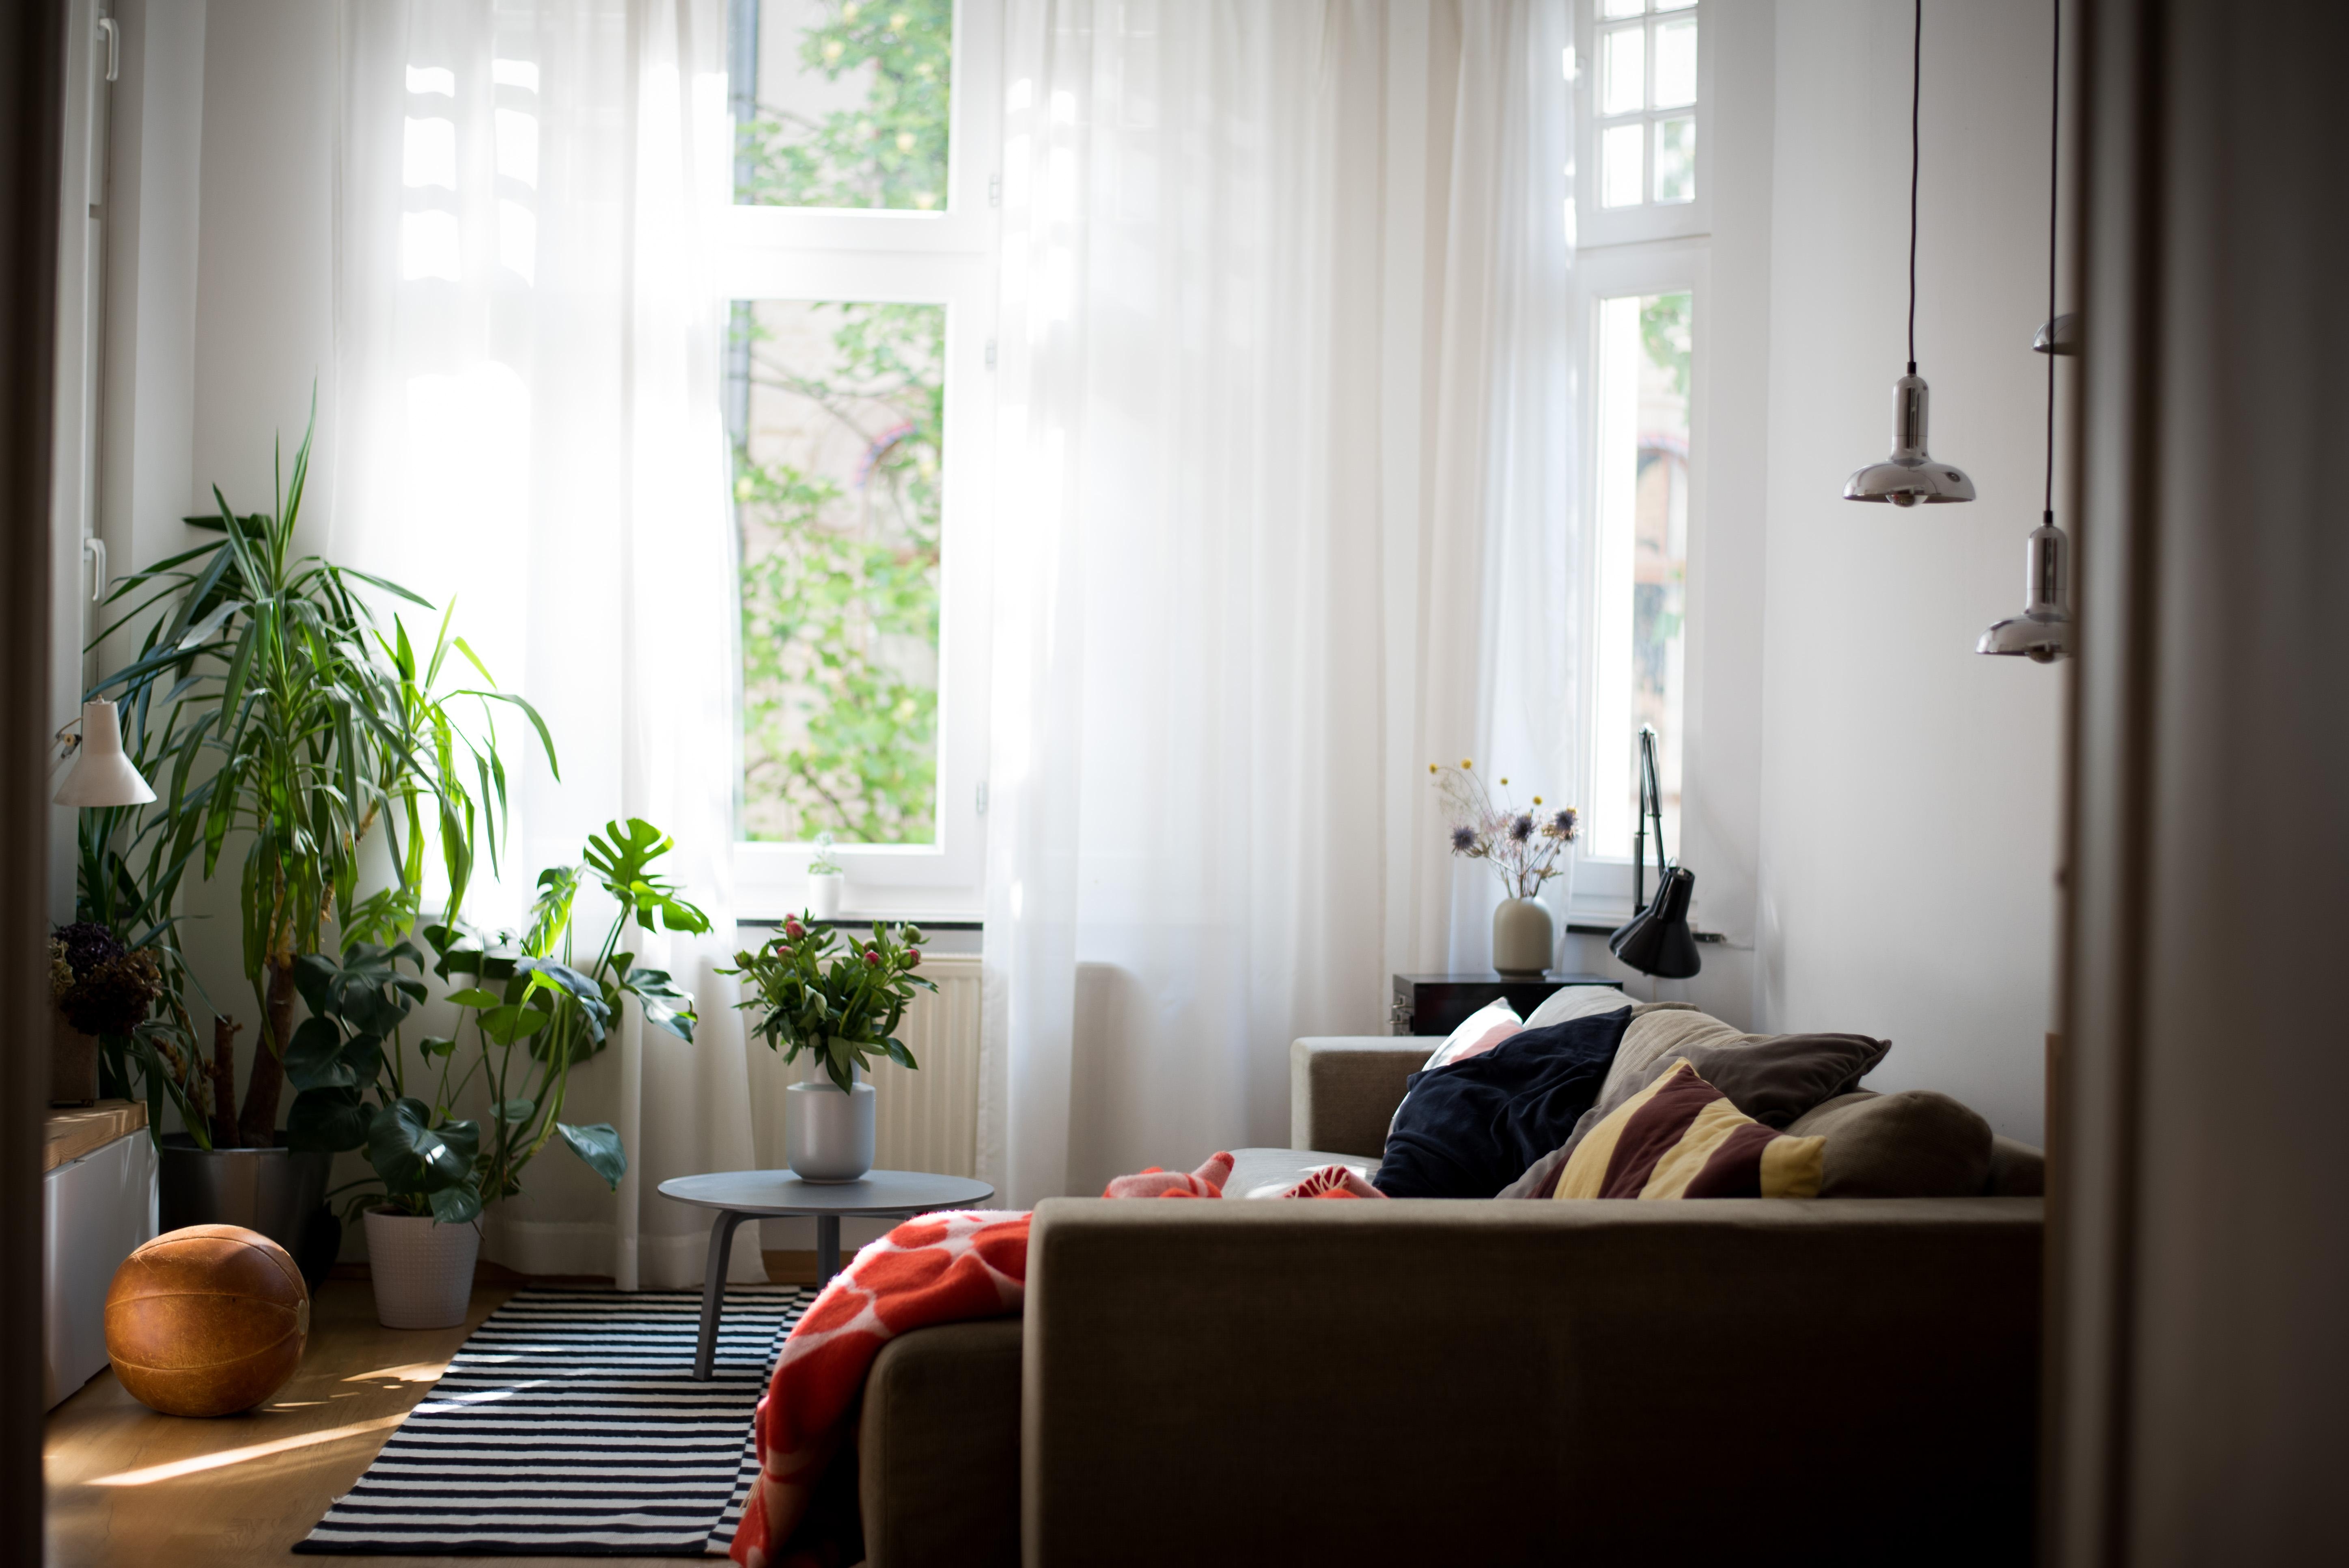 Sunny morning! #wohnzimmer #pflanzen #sofa #interior #altbau #interiorinspo #vintage #slowliving